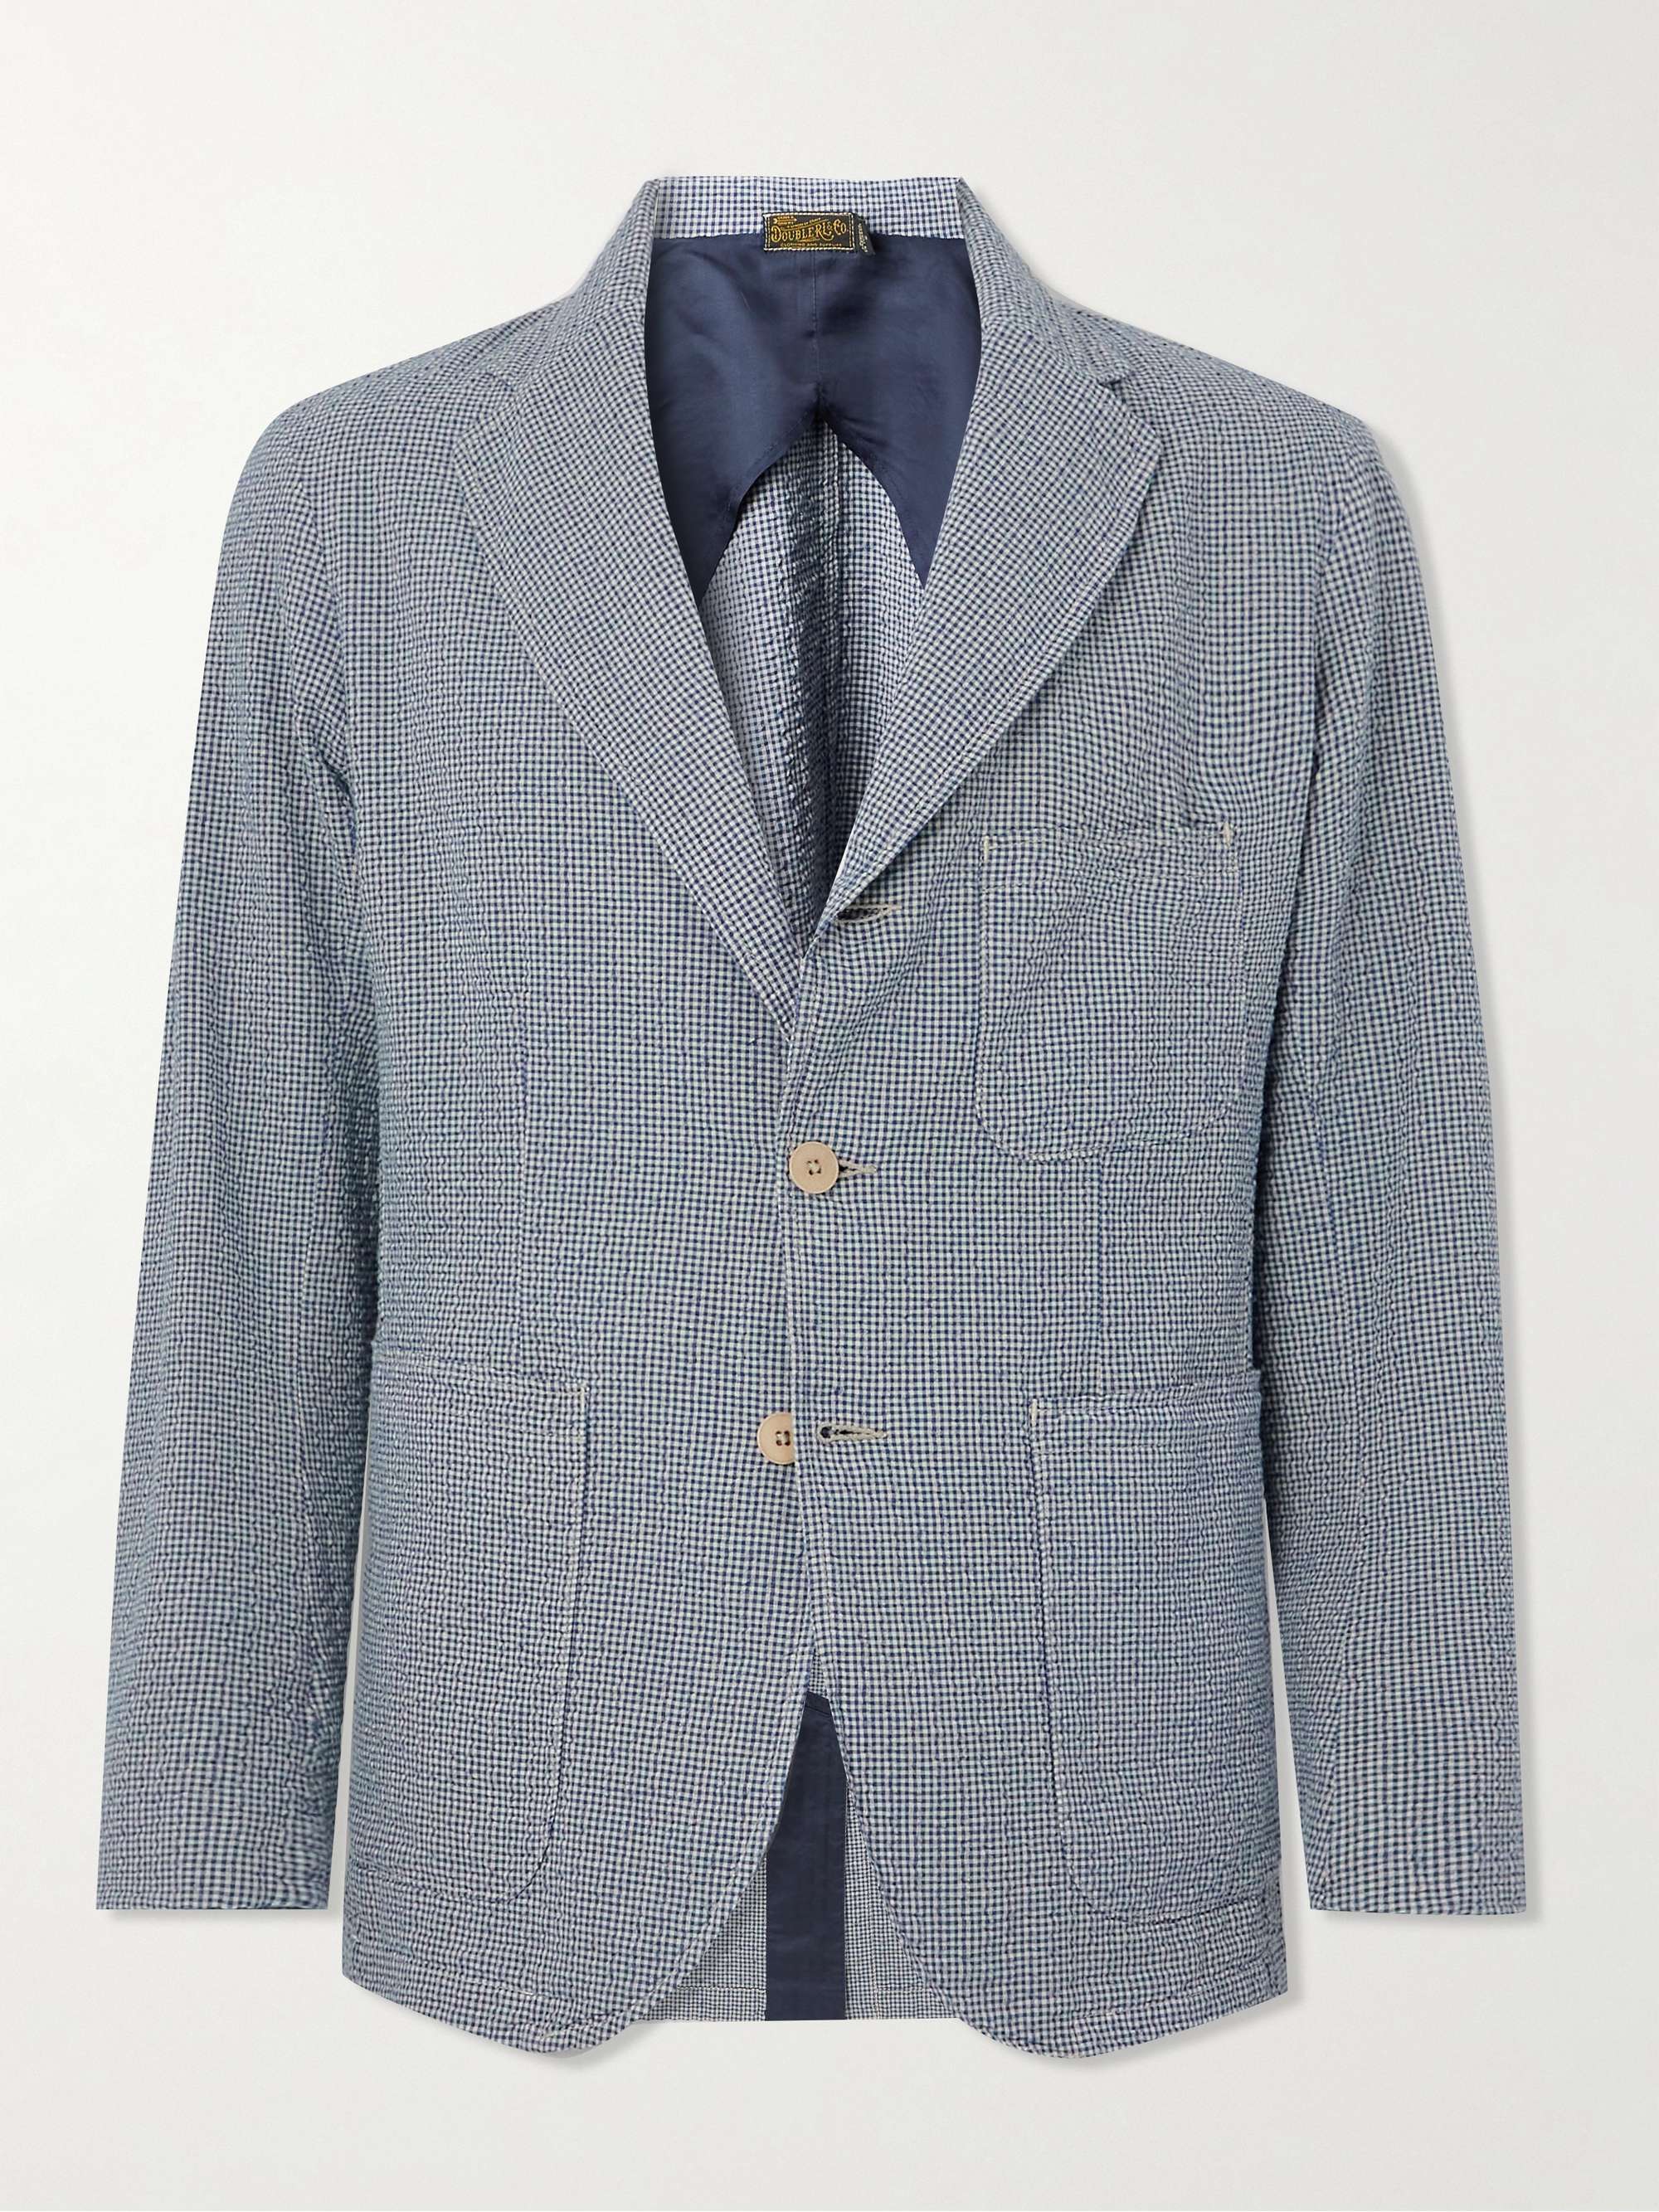 RRL Striped Cotton-Seersucker Suit Jacket